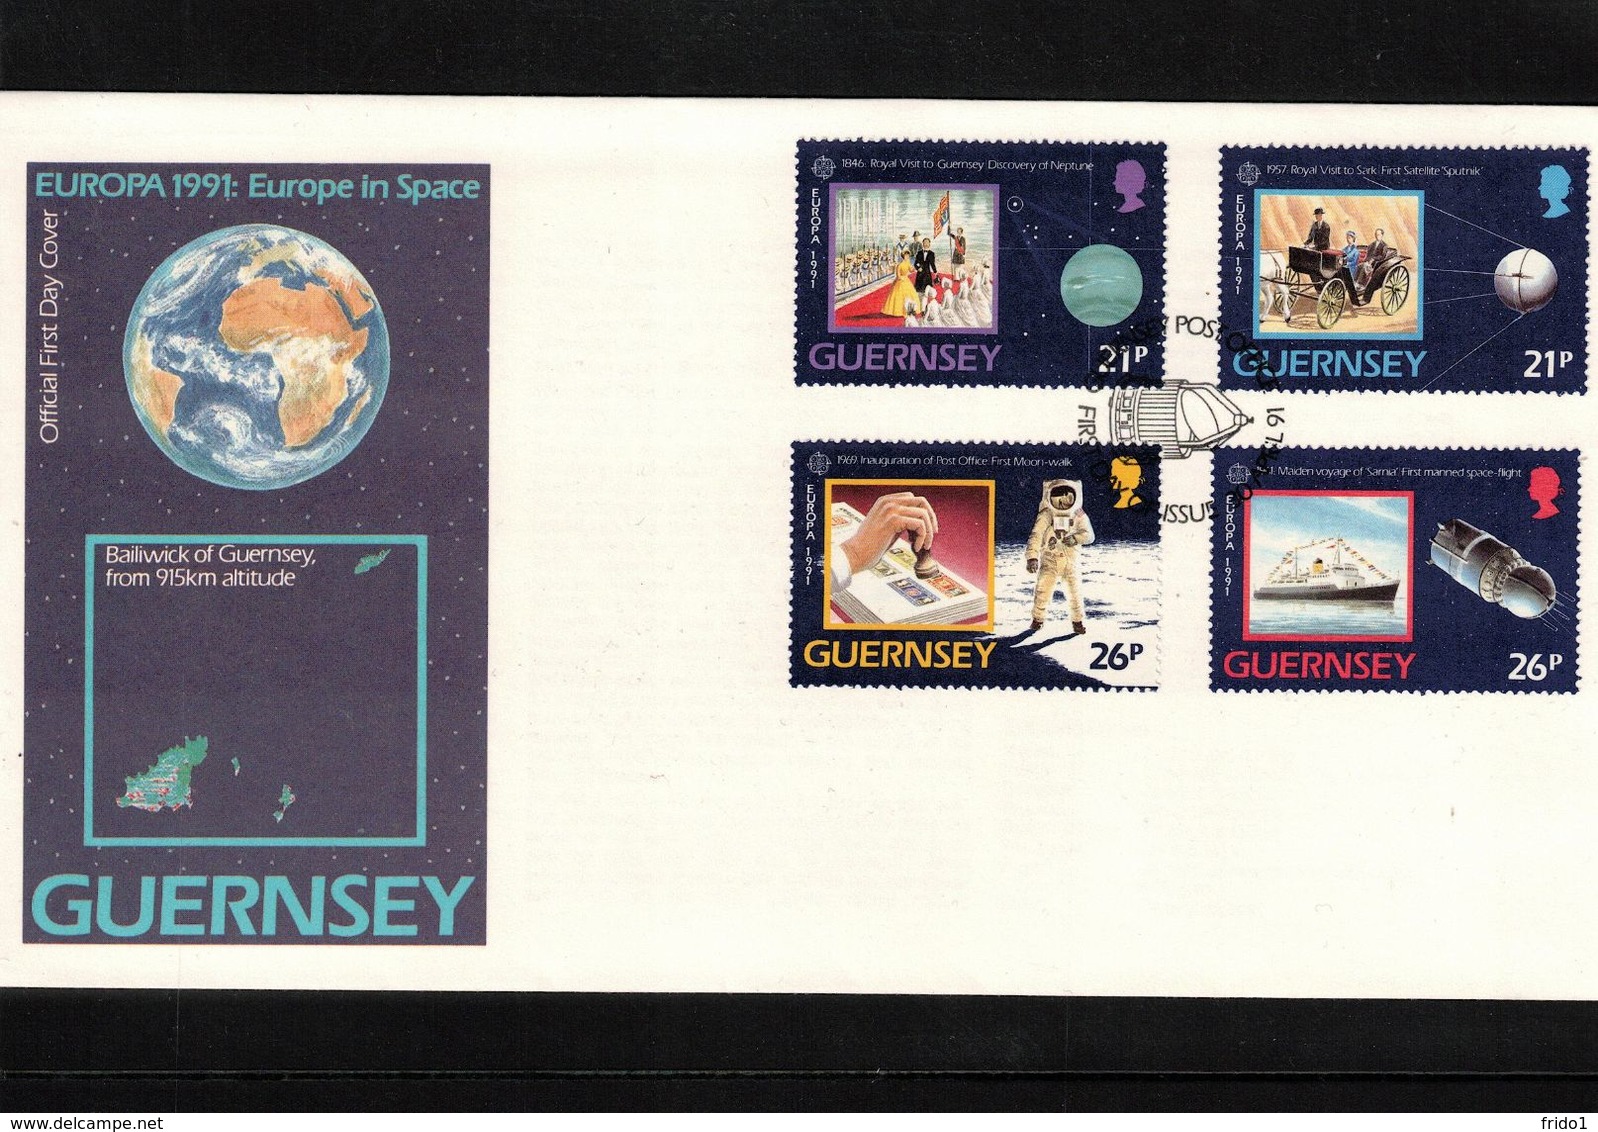 Guernsey 1991 Space / Raumfahrt Europa Cept FDC - Europa